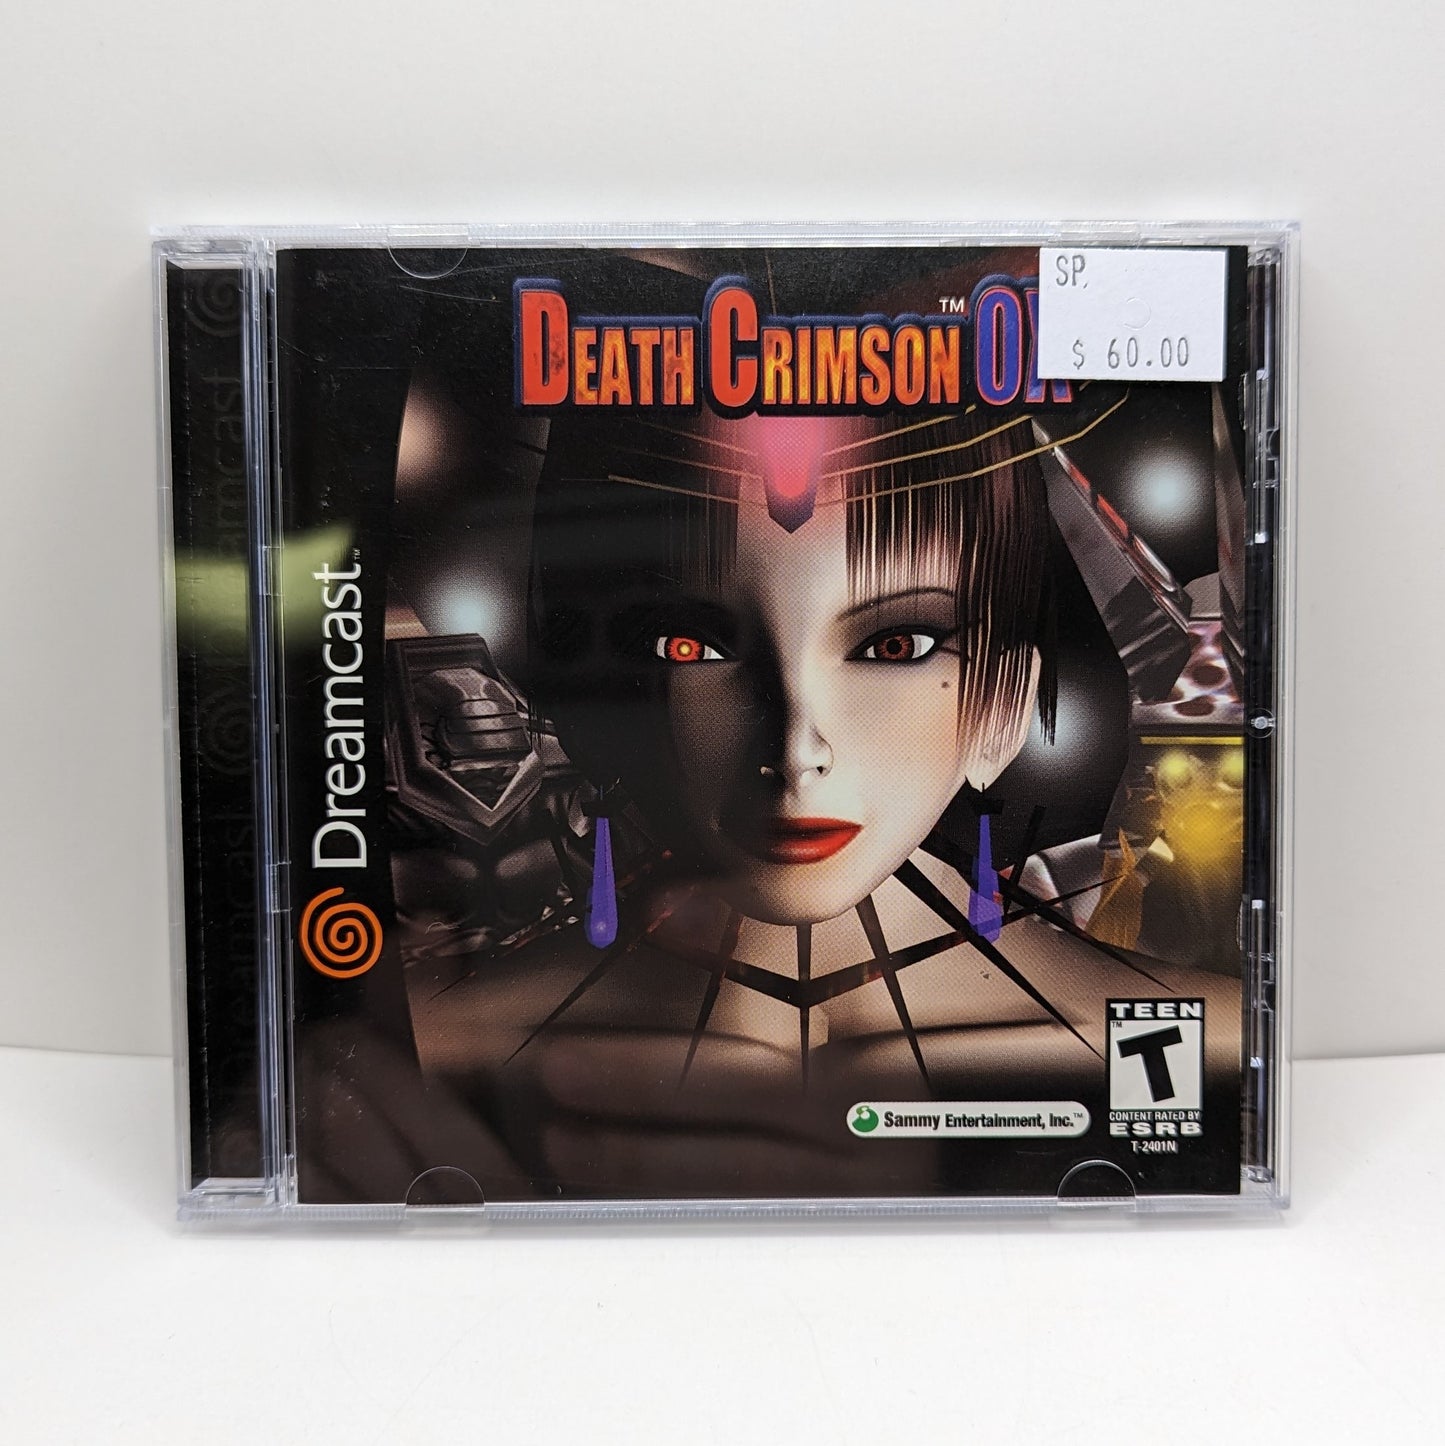 Death Crimson OX (Sega Dreamcast)